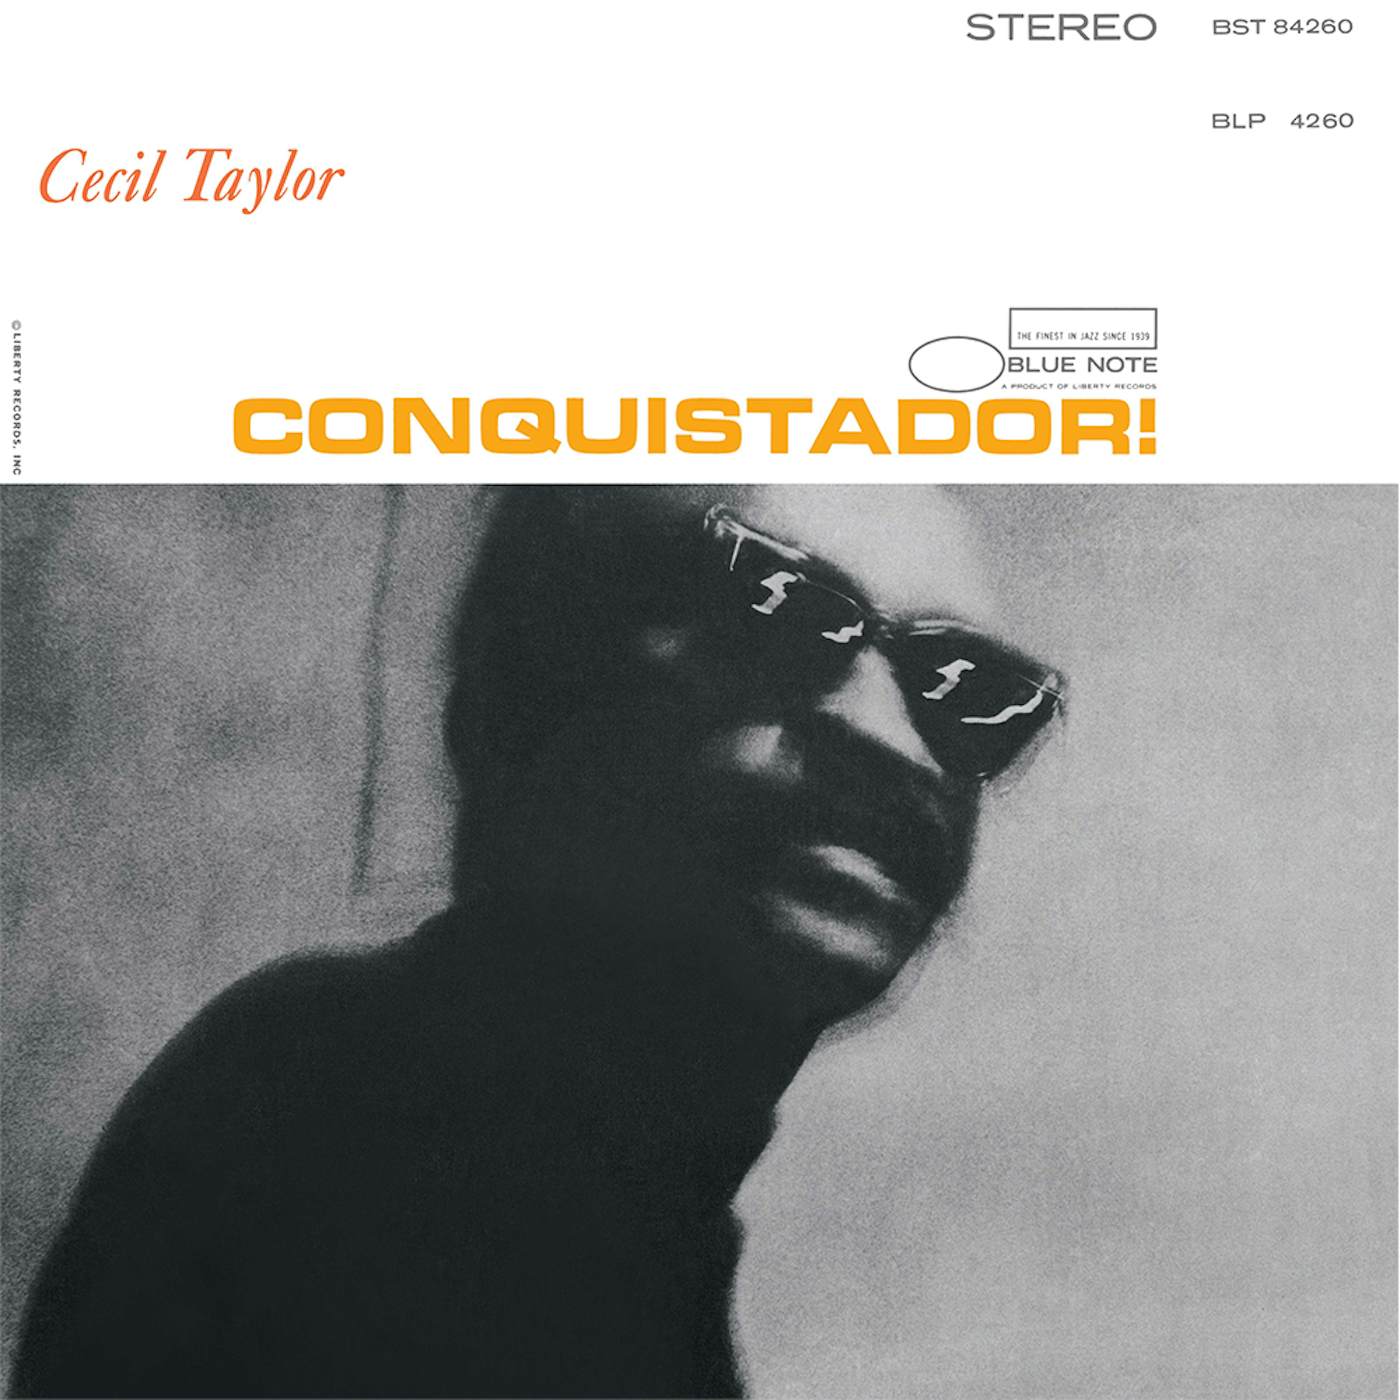 Cecil Taylor - Conquistador! LP (Blue Note 75th Anniversary Reissue Series) (Vinyl)